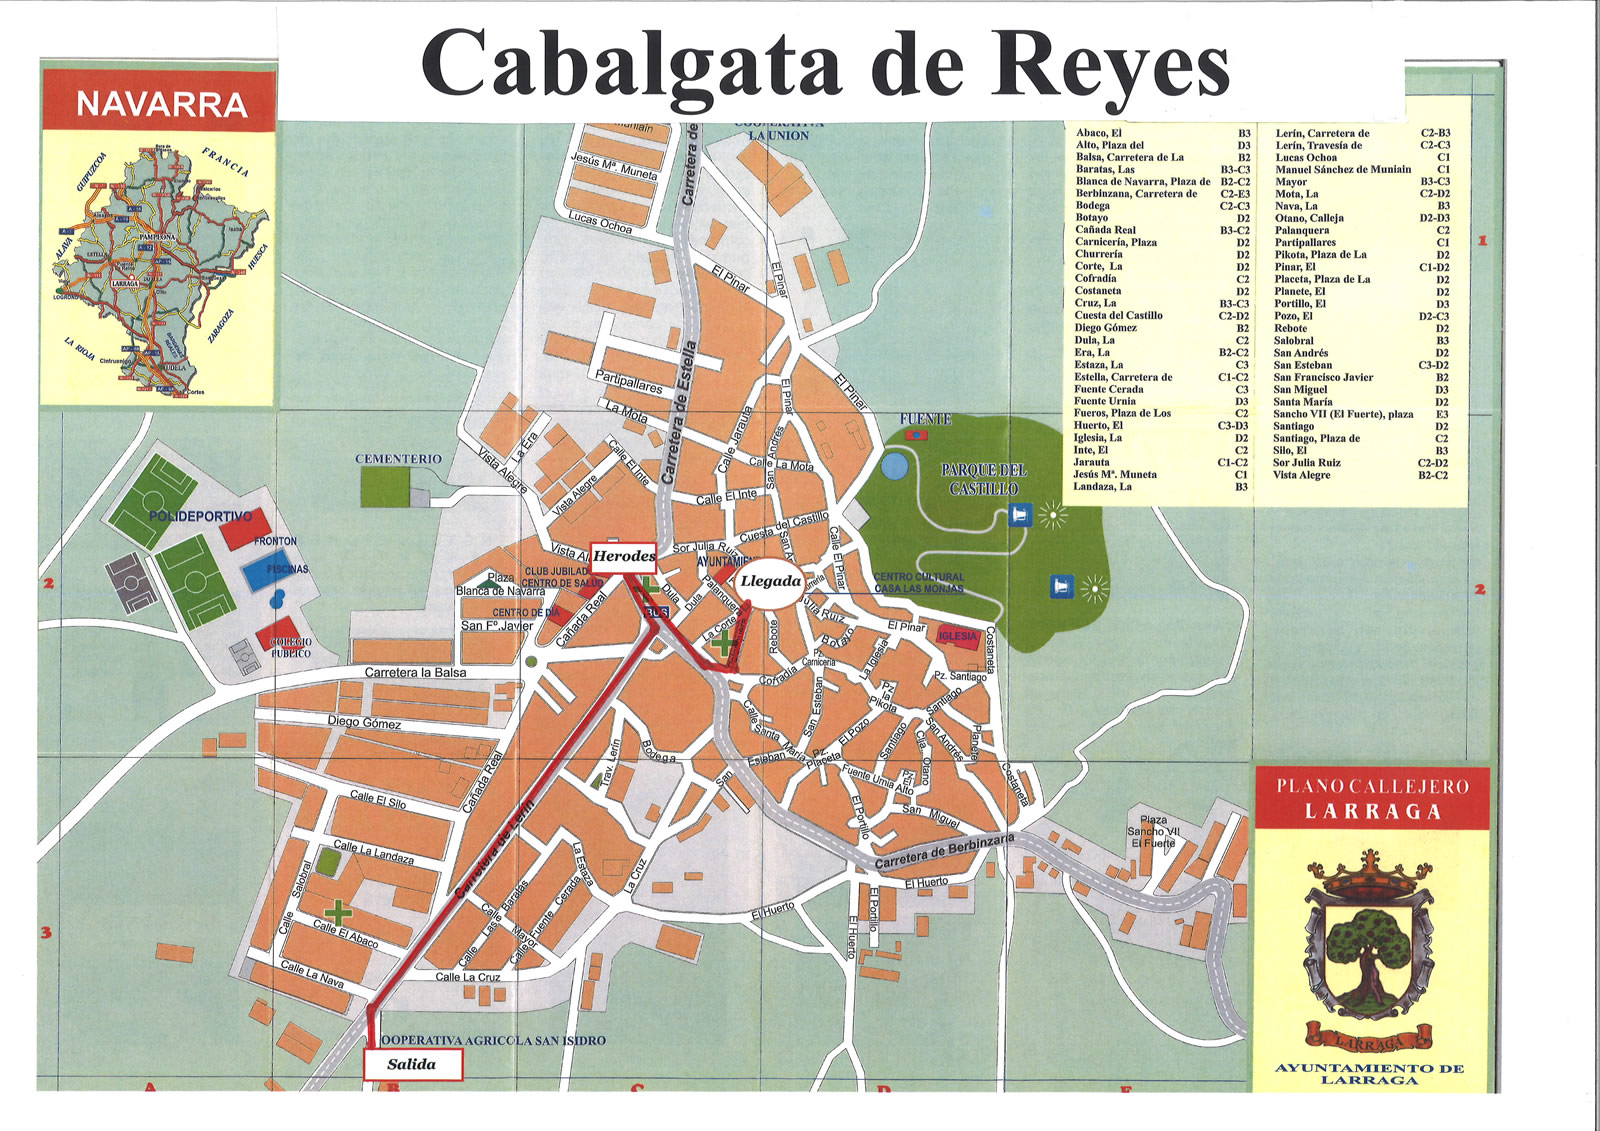 TRAIL OF THE REYES CABALGATA IN LARRAGA